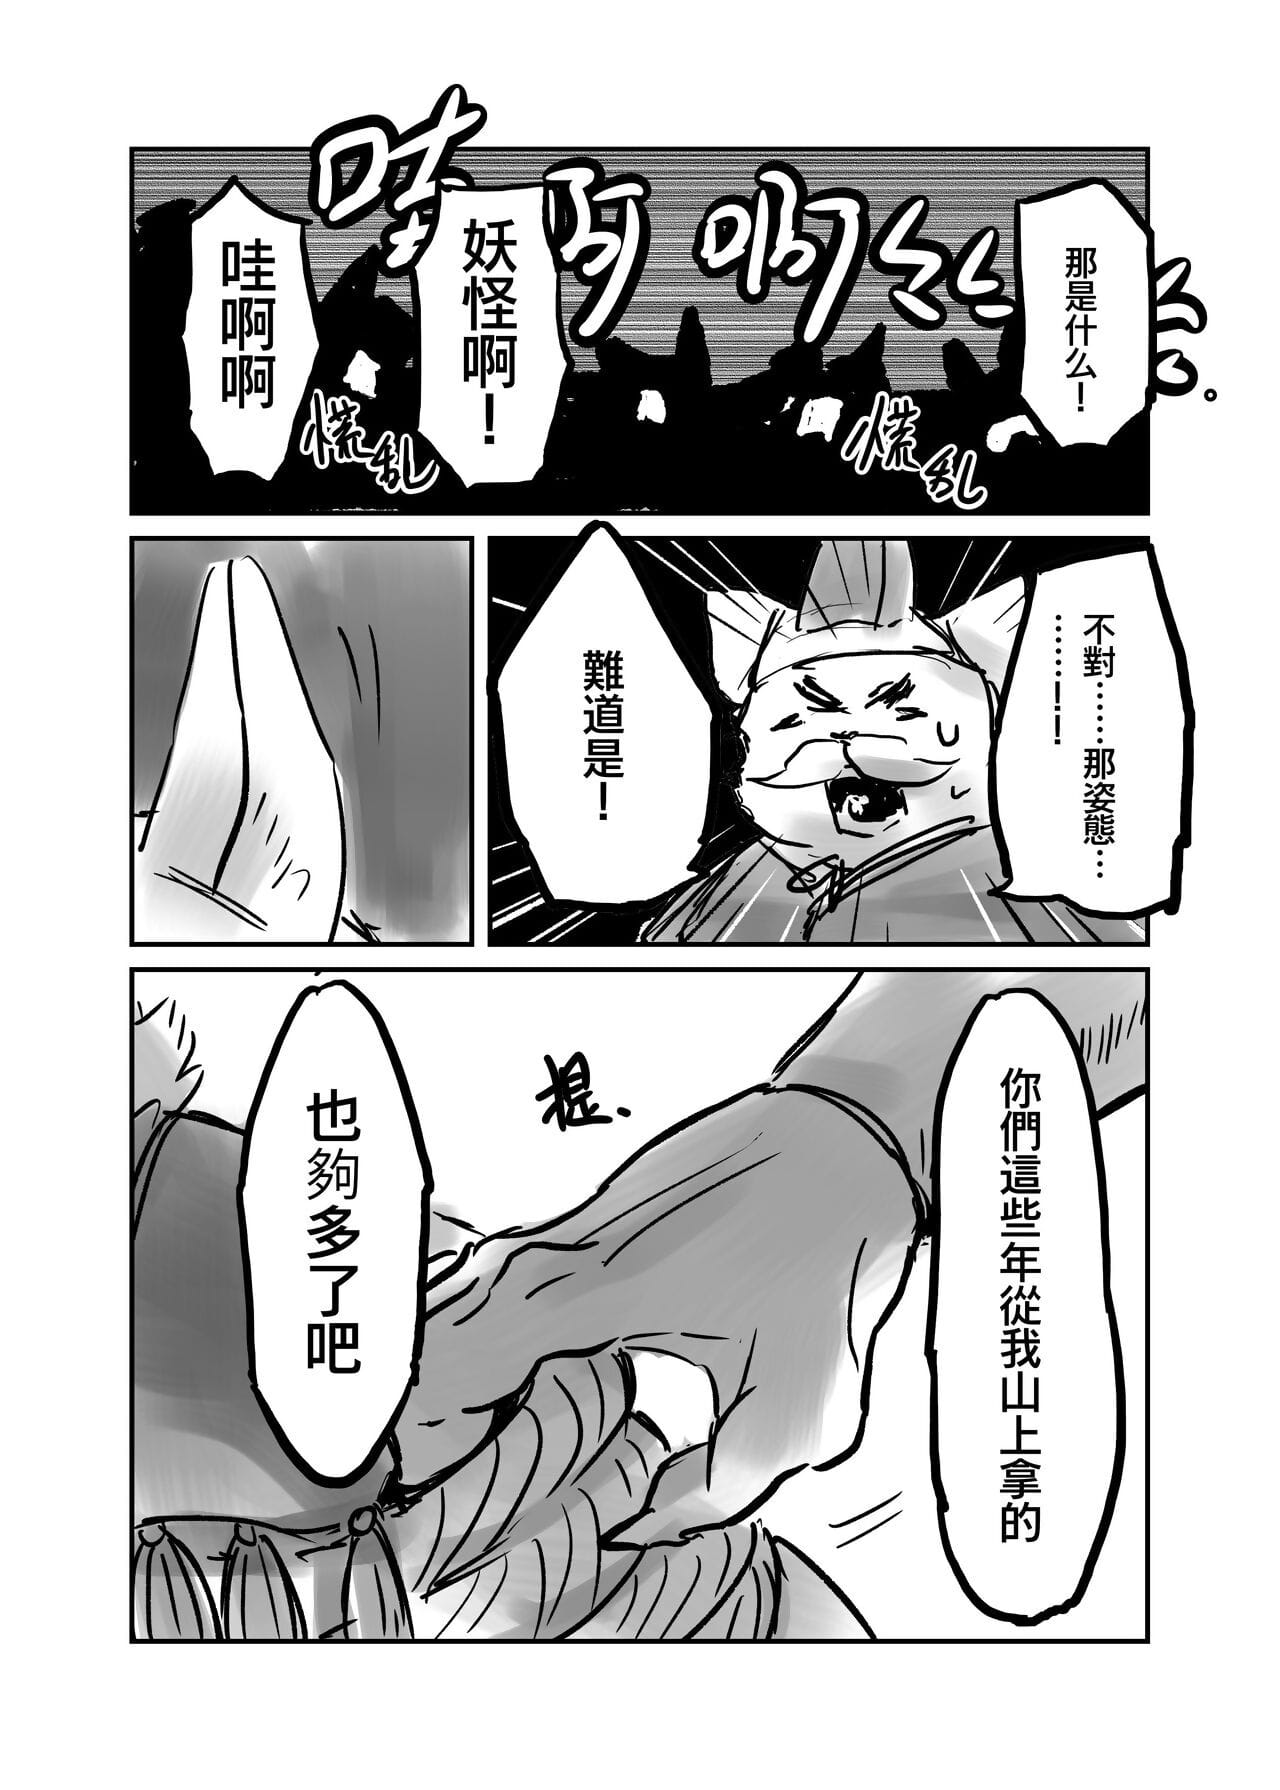 （the Посетитель 他乡之人 by：鬼流 часть 3 page 1